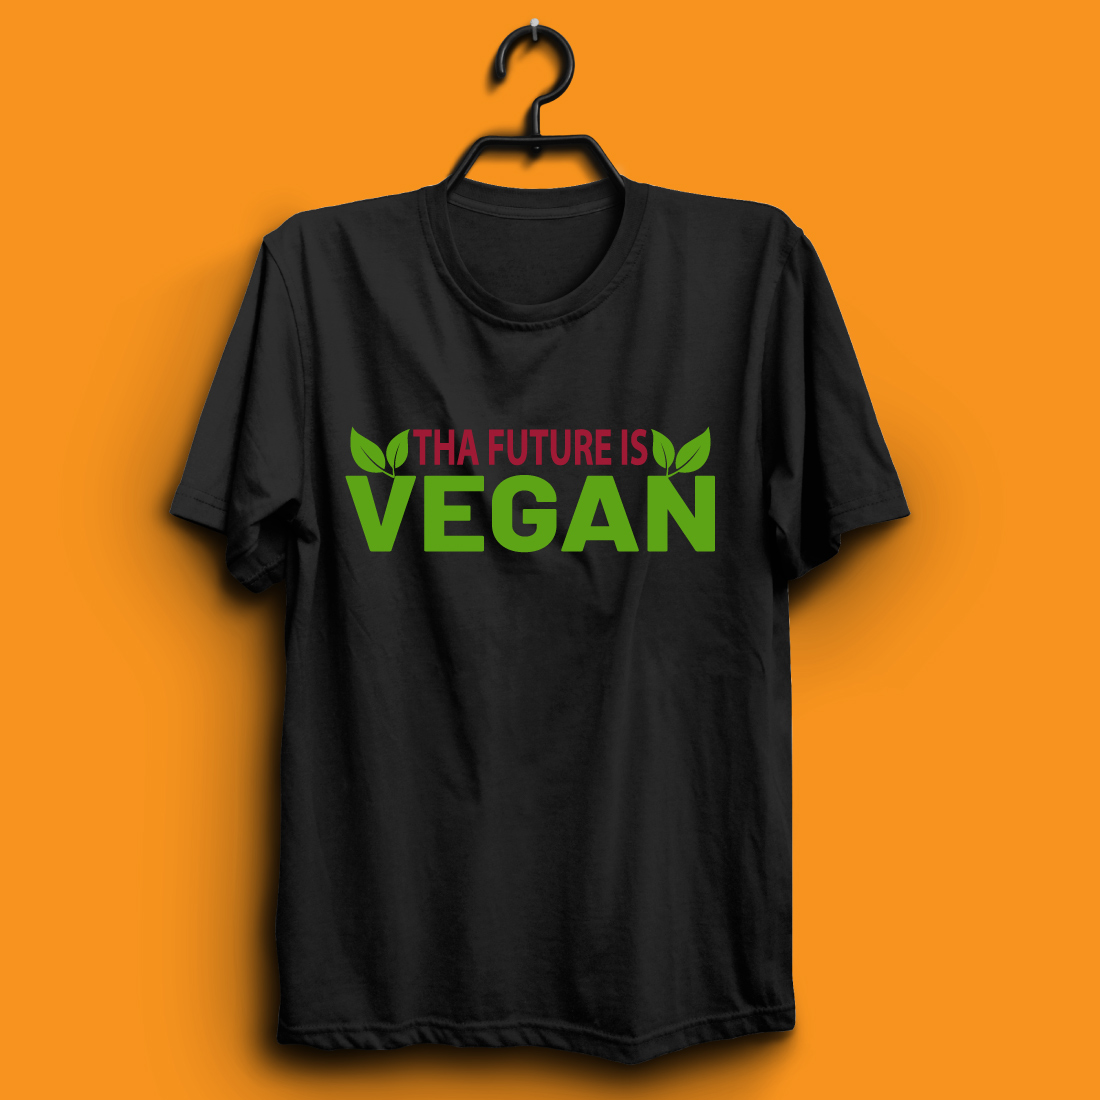 world vegan day t shirt design01 686